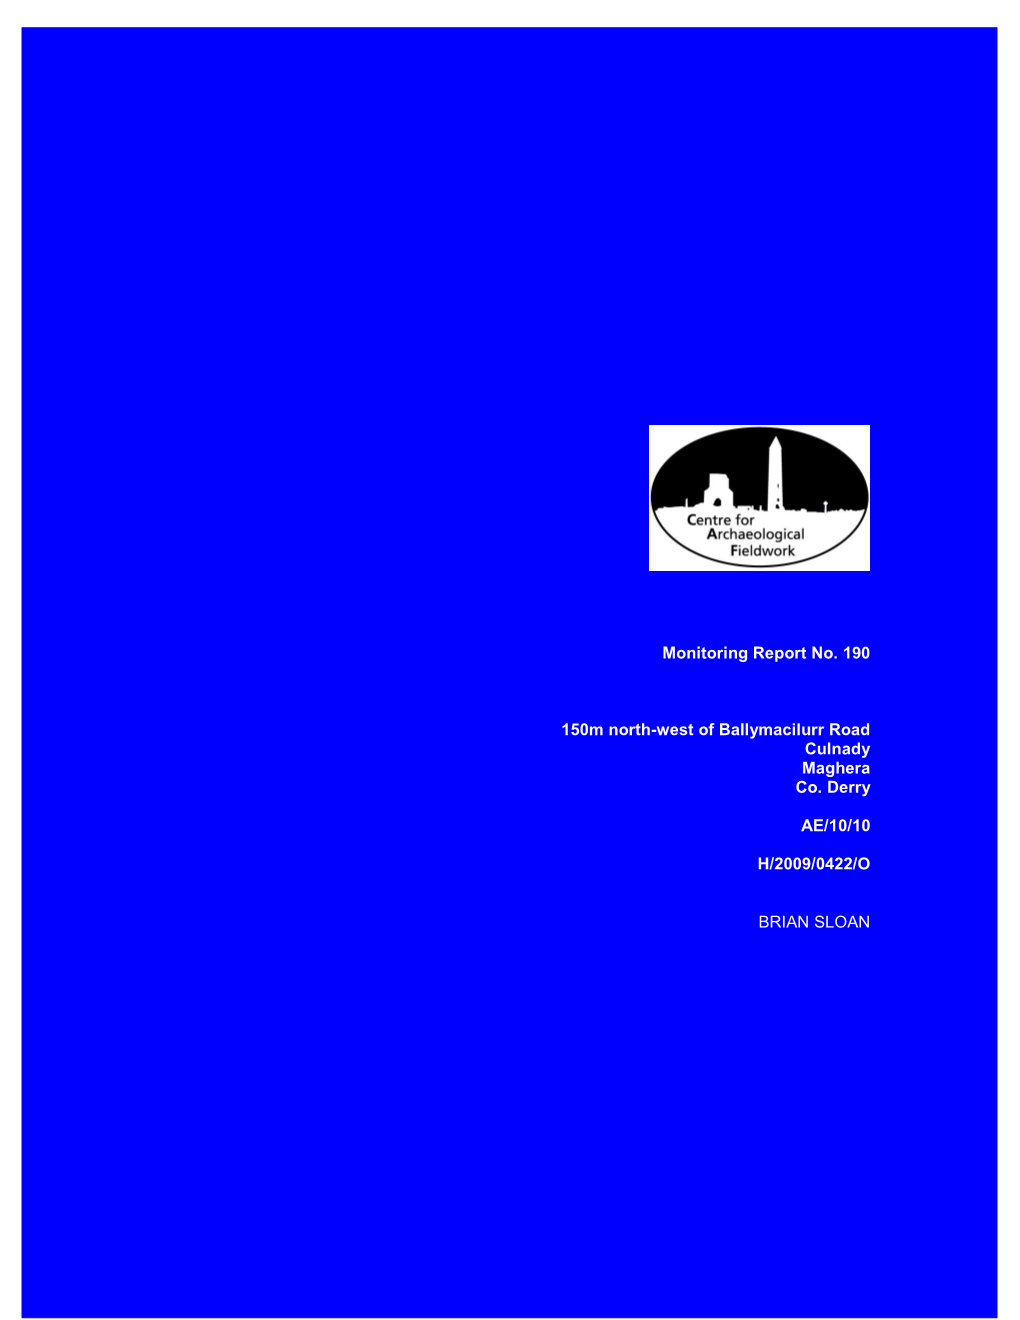 Centre for Archaeological Fieldwork Evaluation/Monitoring Report No. 179 Monitoring Report No. 190 150M North-West of Ballymacil